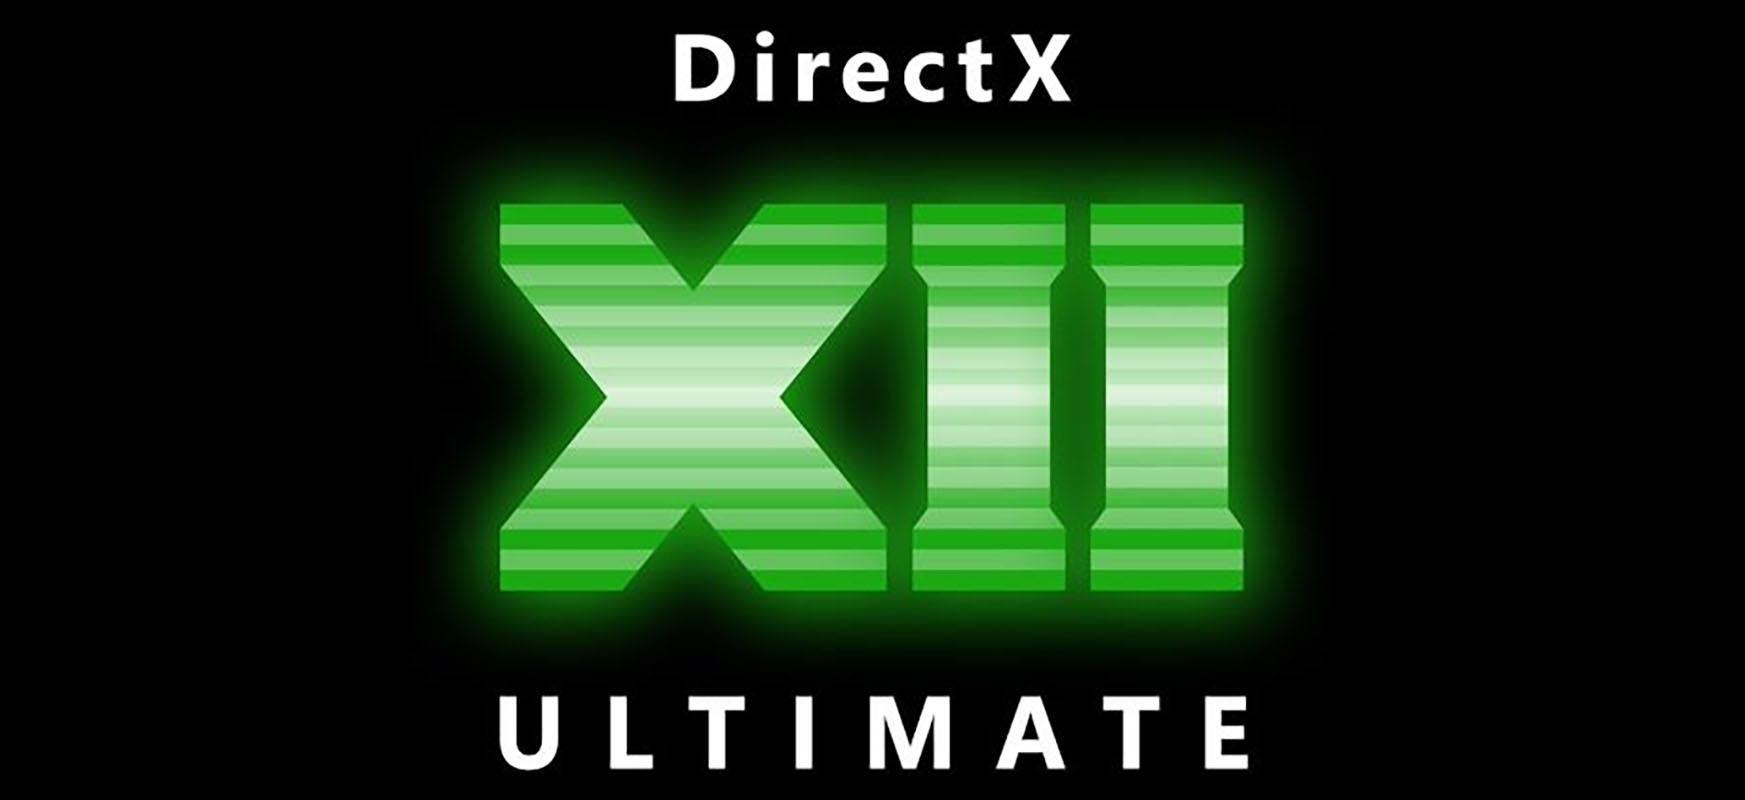 directx 12 full version free download